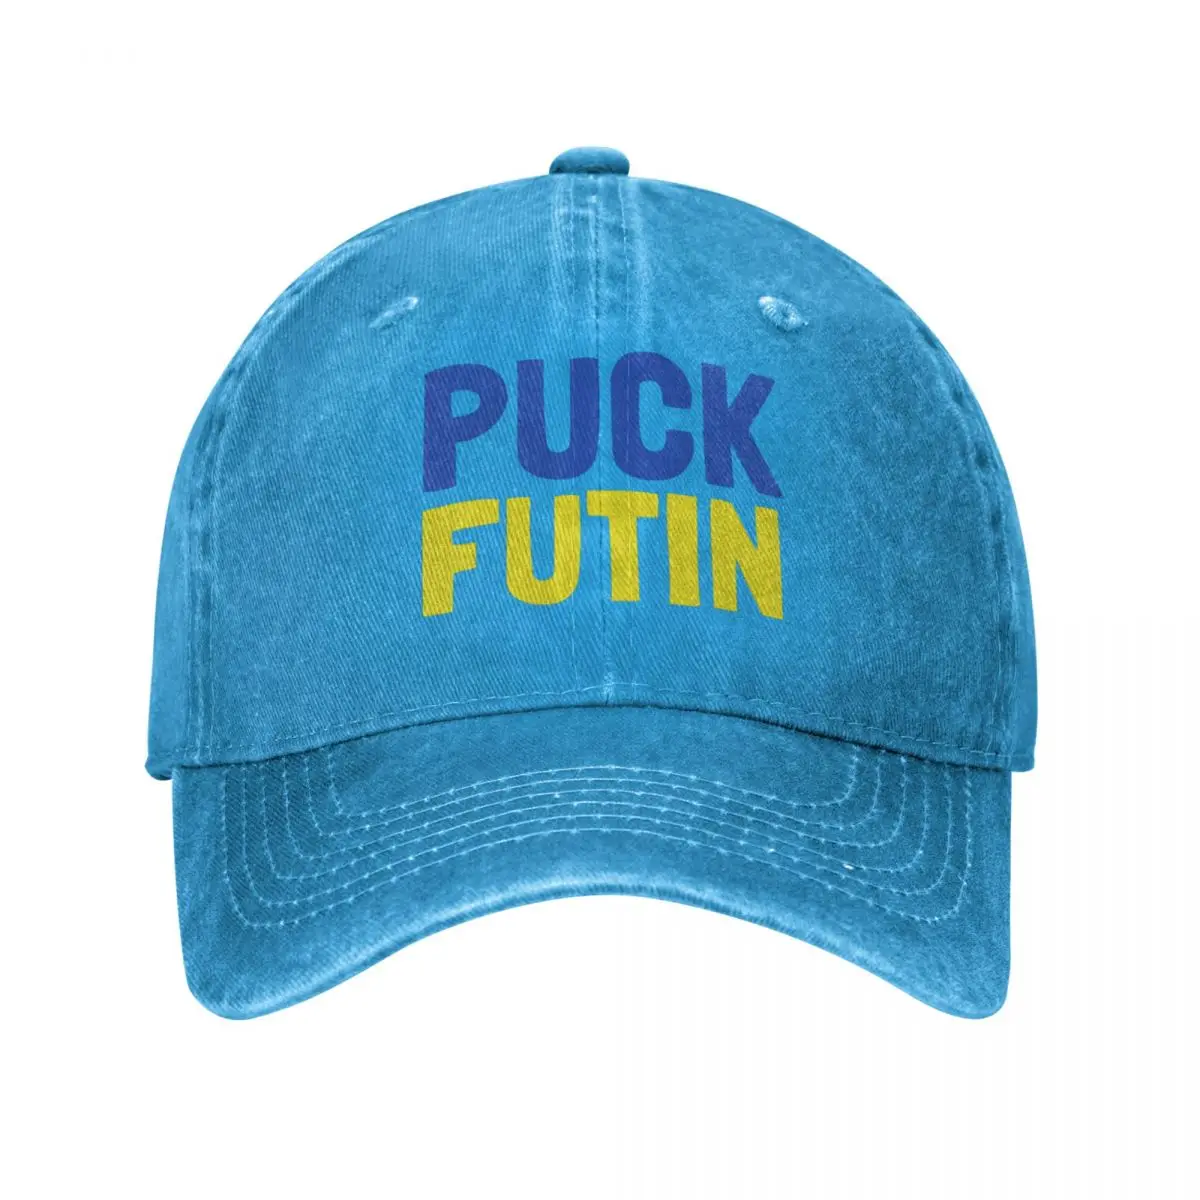 

Puck Futin Baseball Cap Snapback Cap Snap Back Hat Sun Hat Sun Hats For Women Men'S